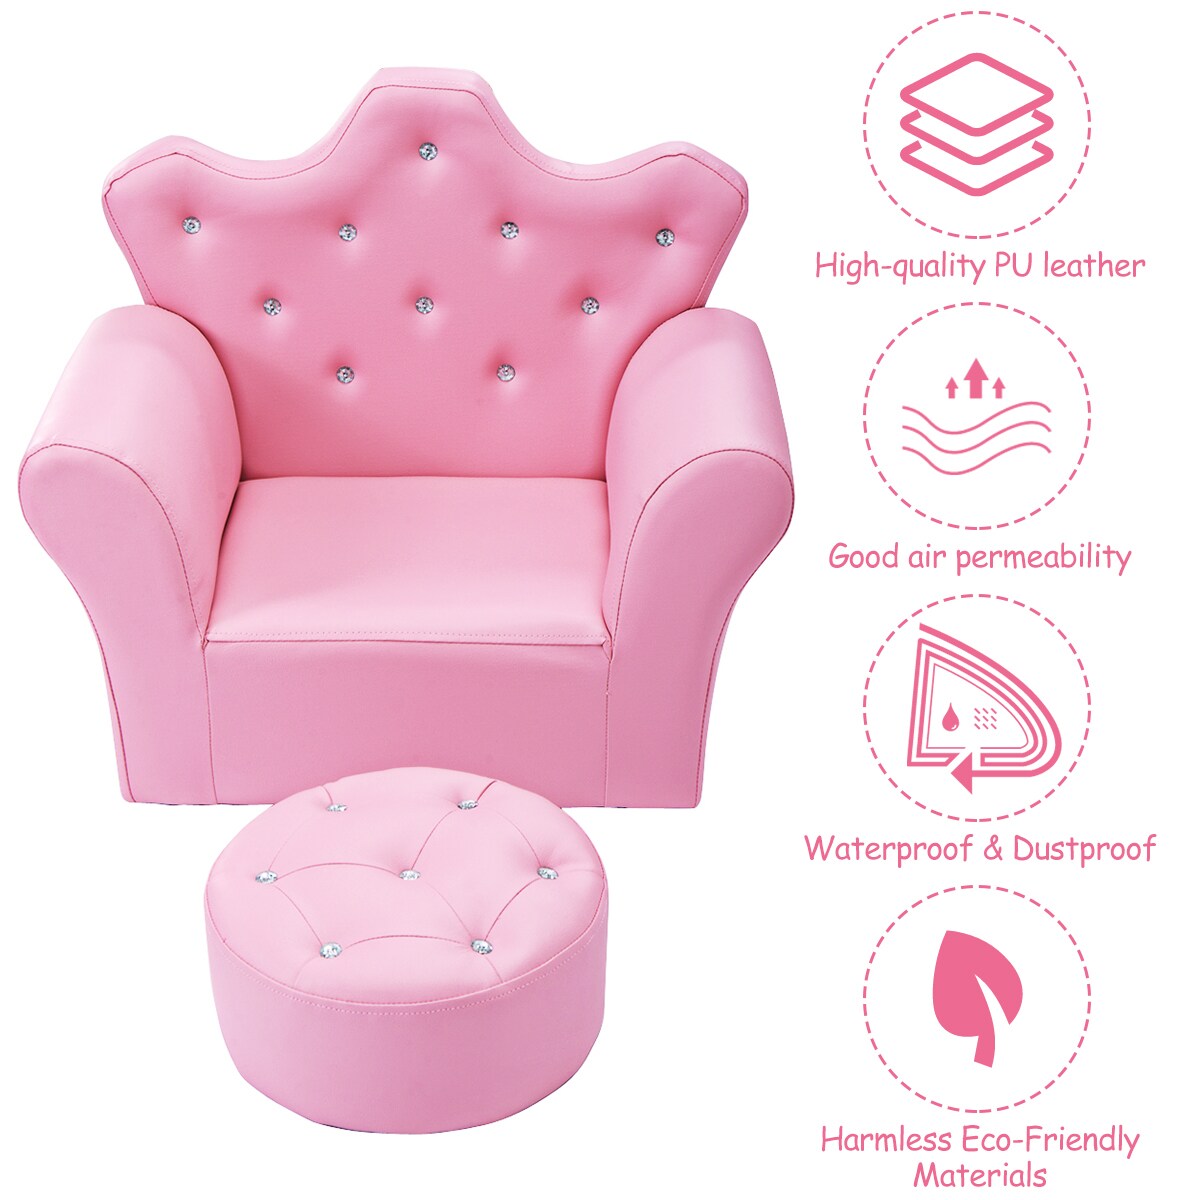 Costway Pink Kids Sofa Armrest Chair Couch Children Toddler Birthday Gift w/ Ottoman